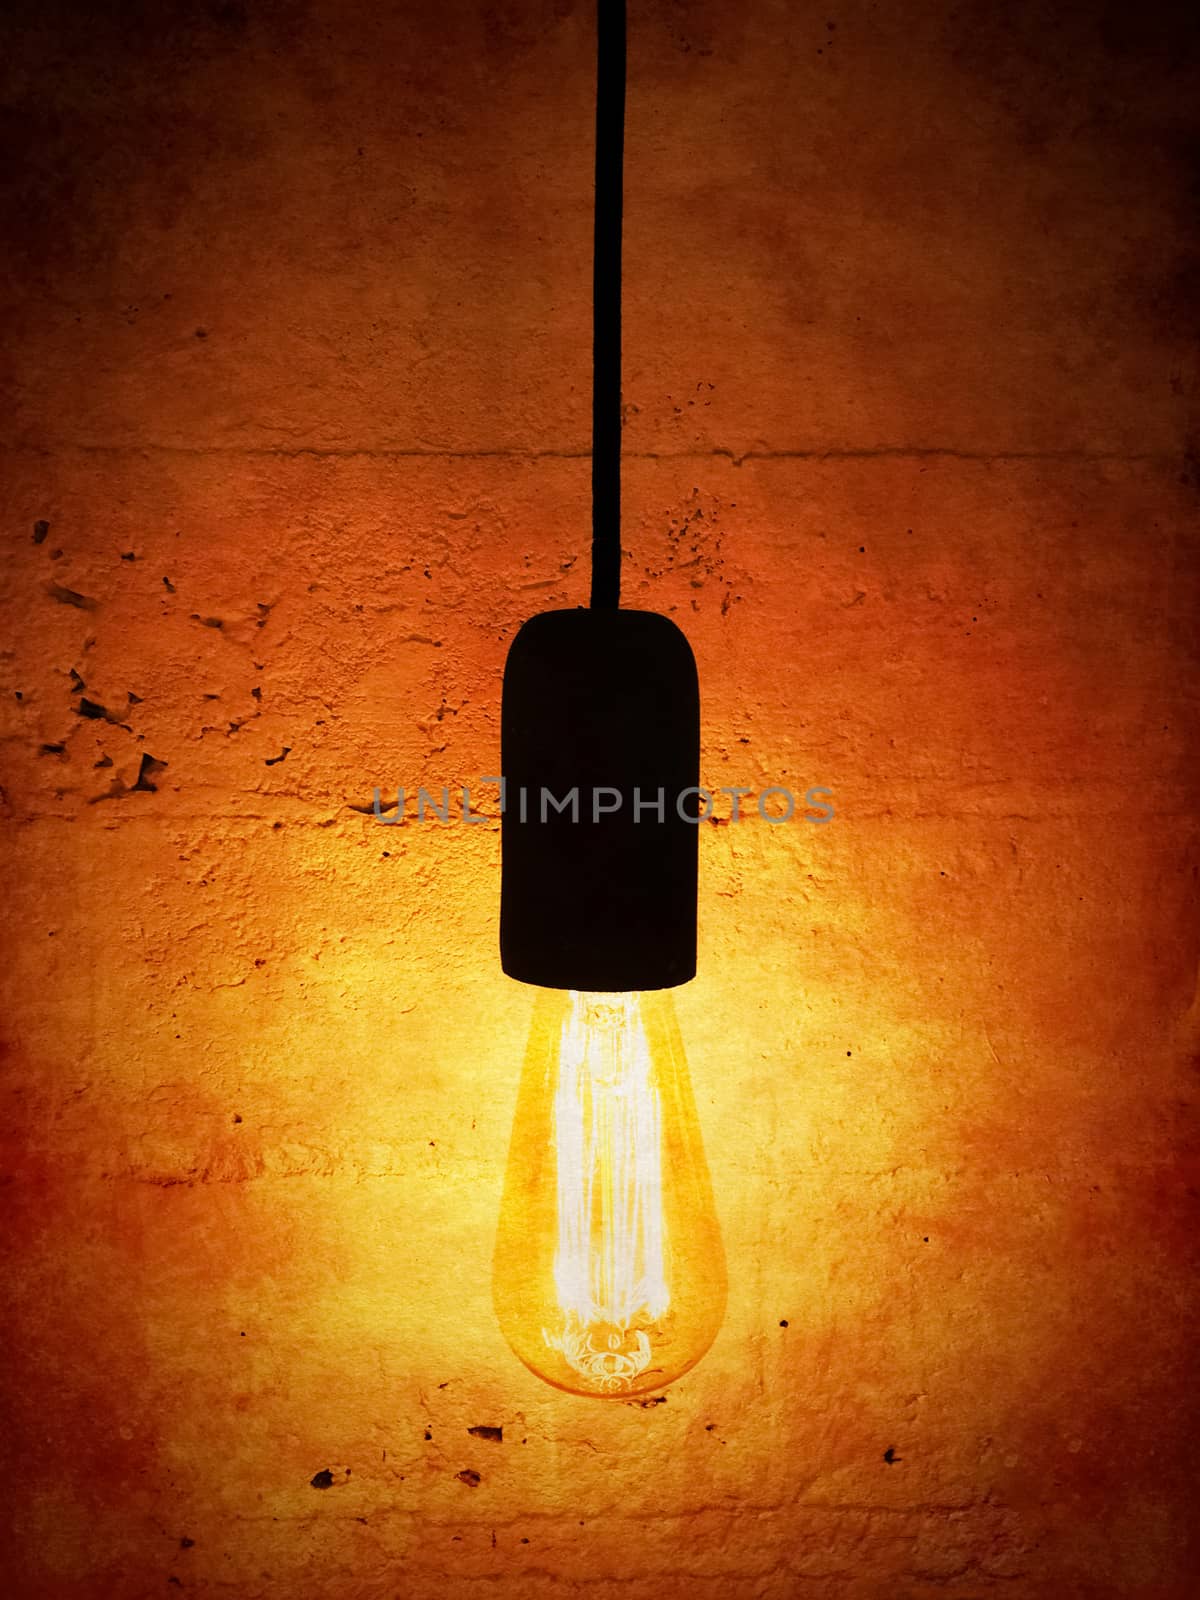 Light bulb on vintage orange background. Design with retro feel.